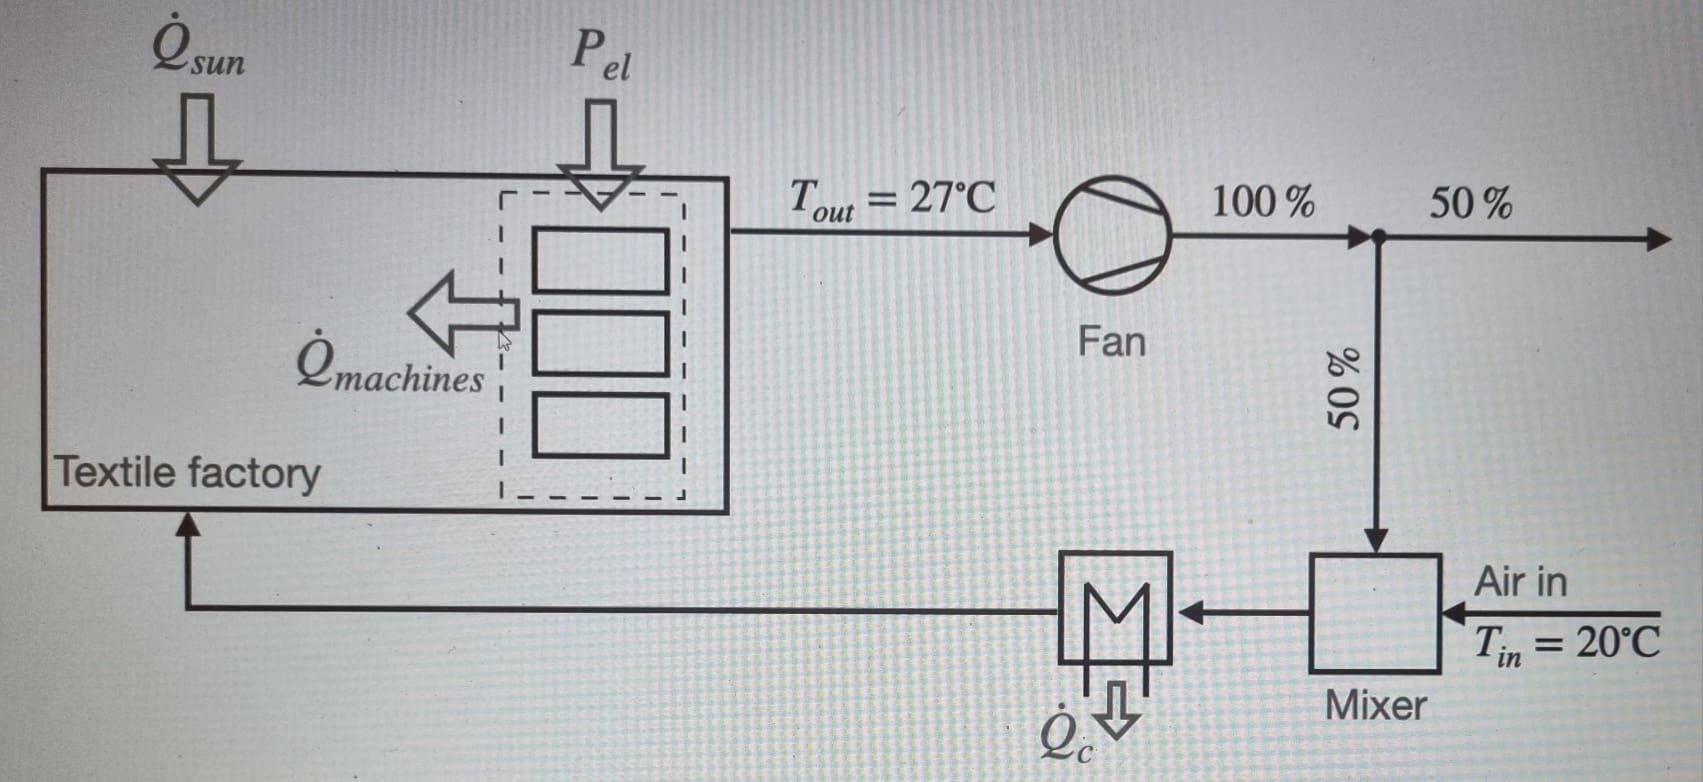 sun Textile factory machine Pel Tout= 27C Fan Qc 100% 50% Mixer 50% Air in Tin = 20C